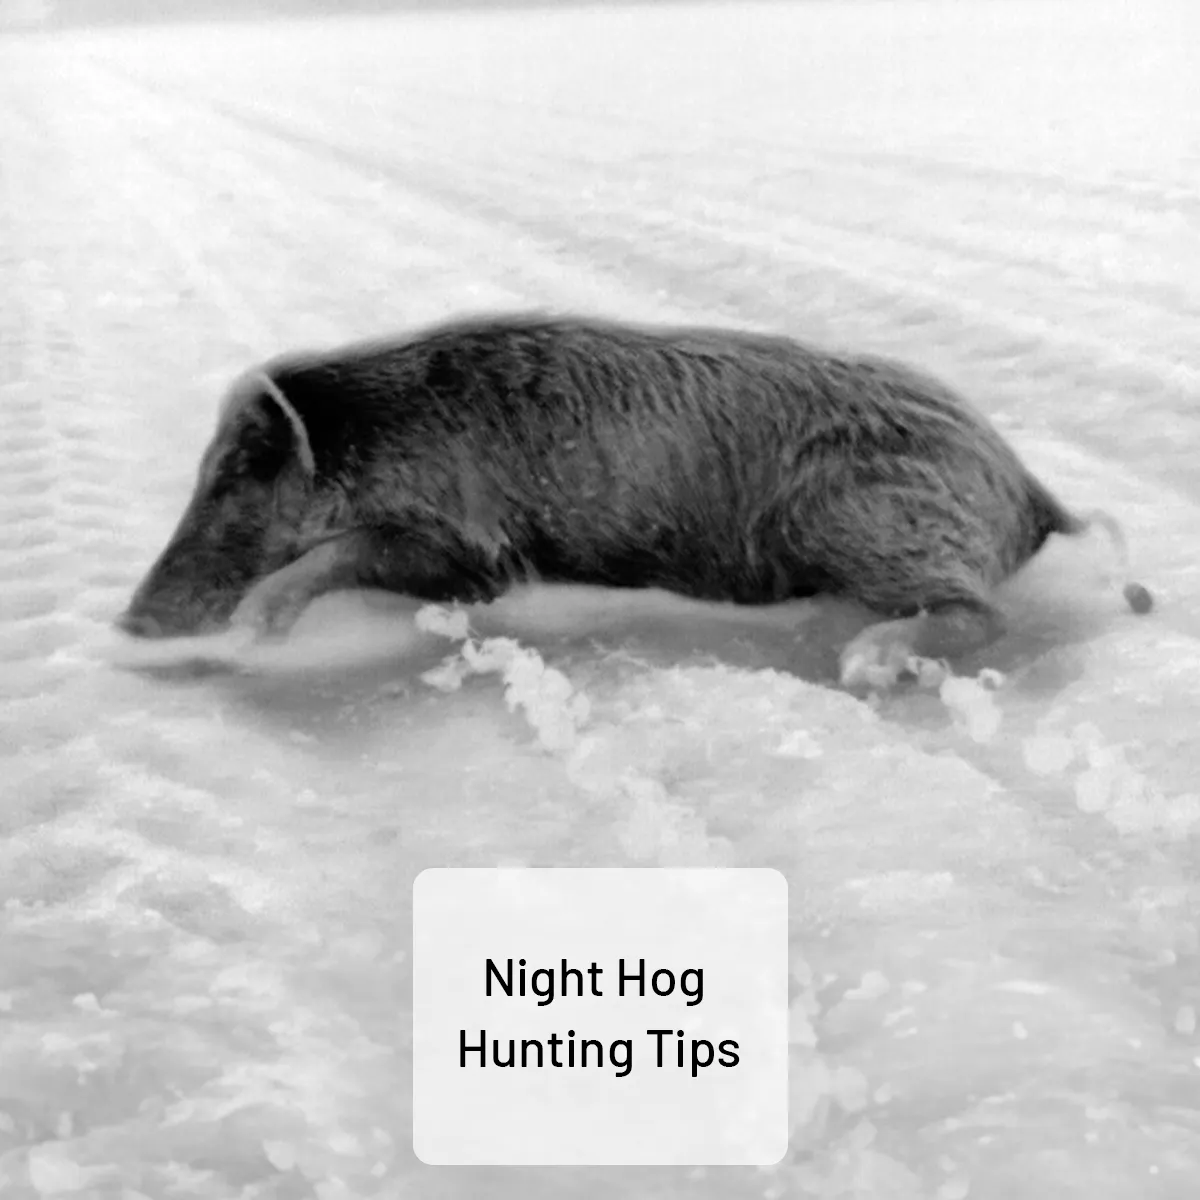 Night hog hunting tips